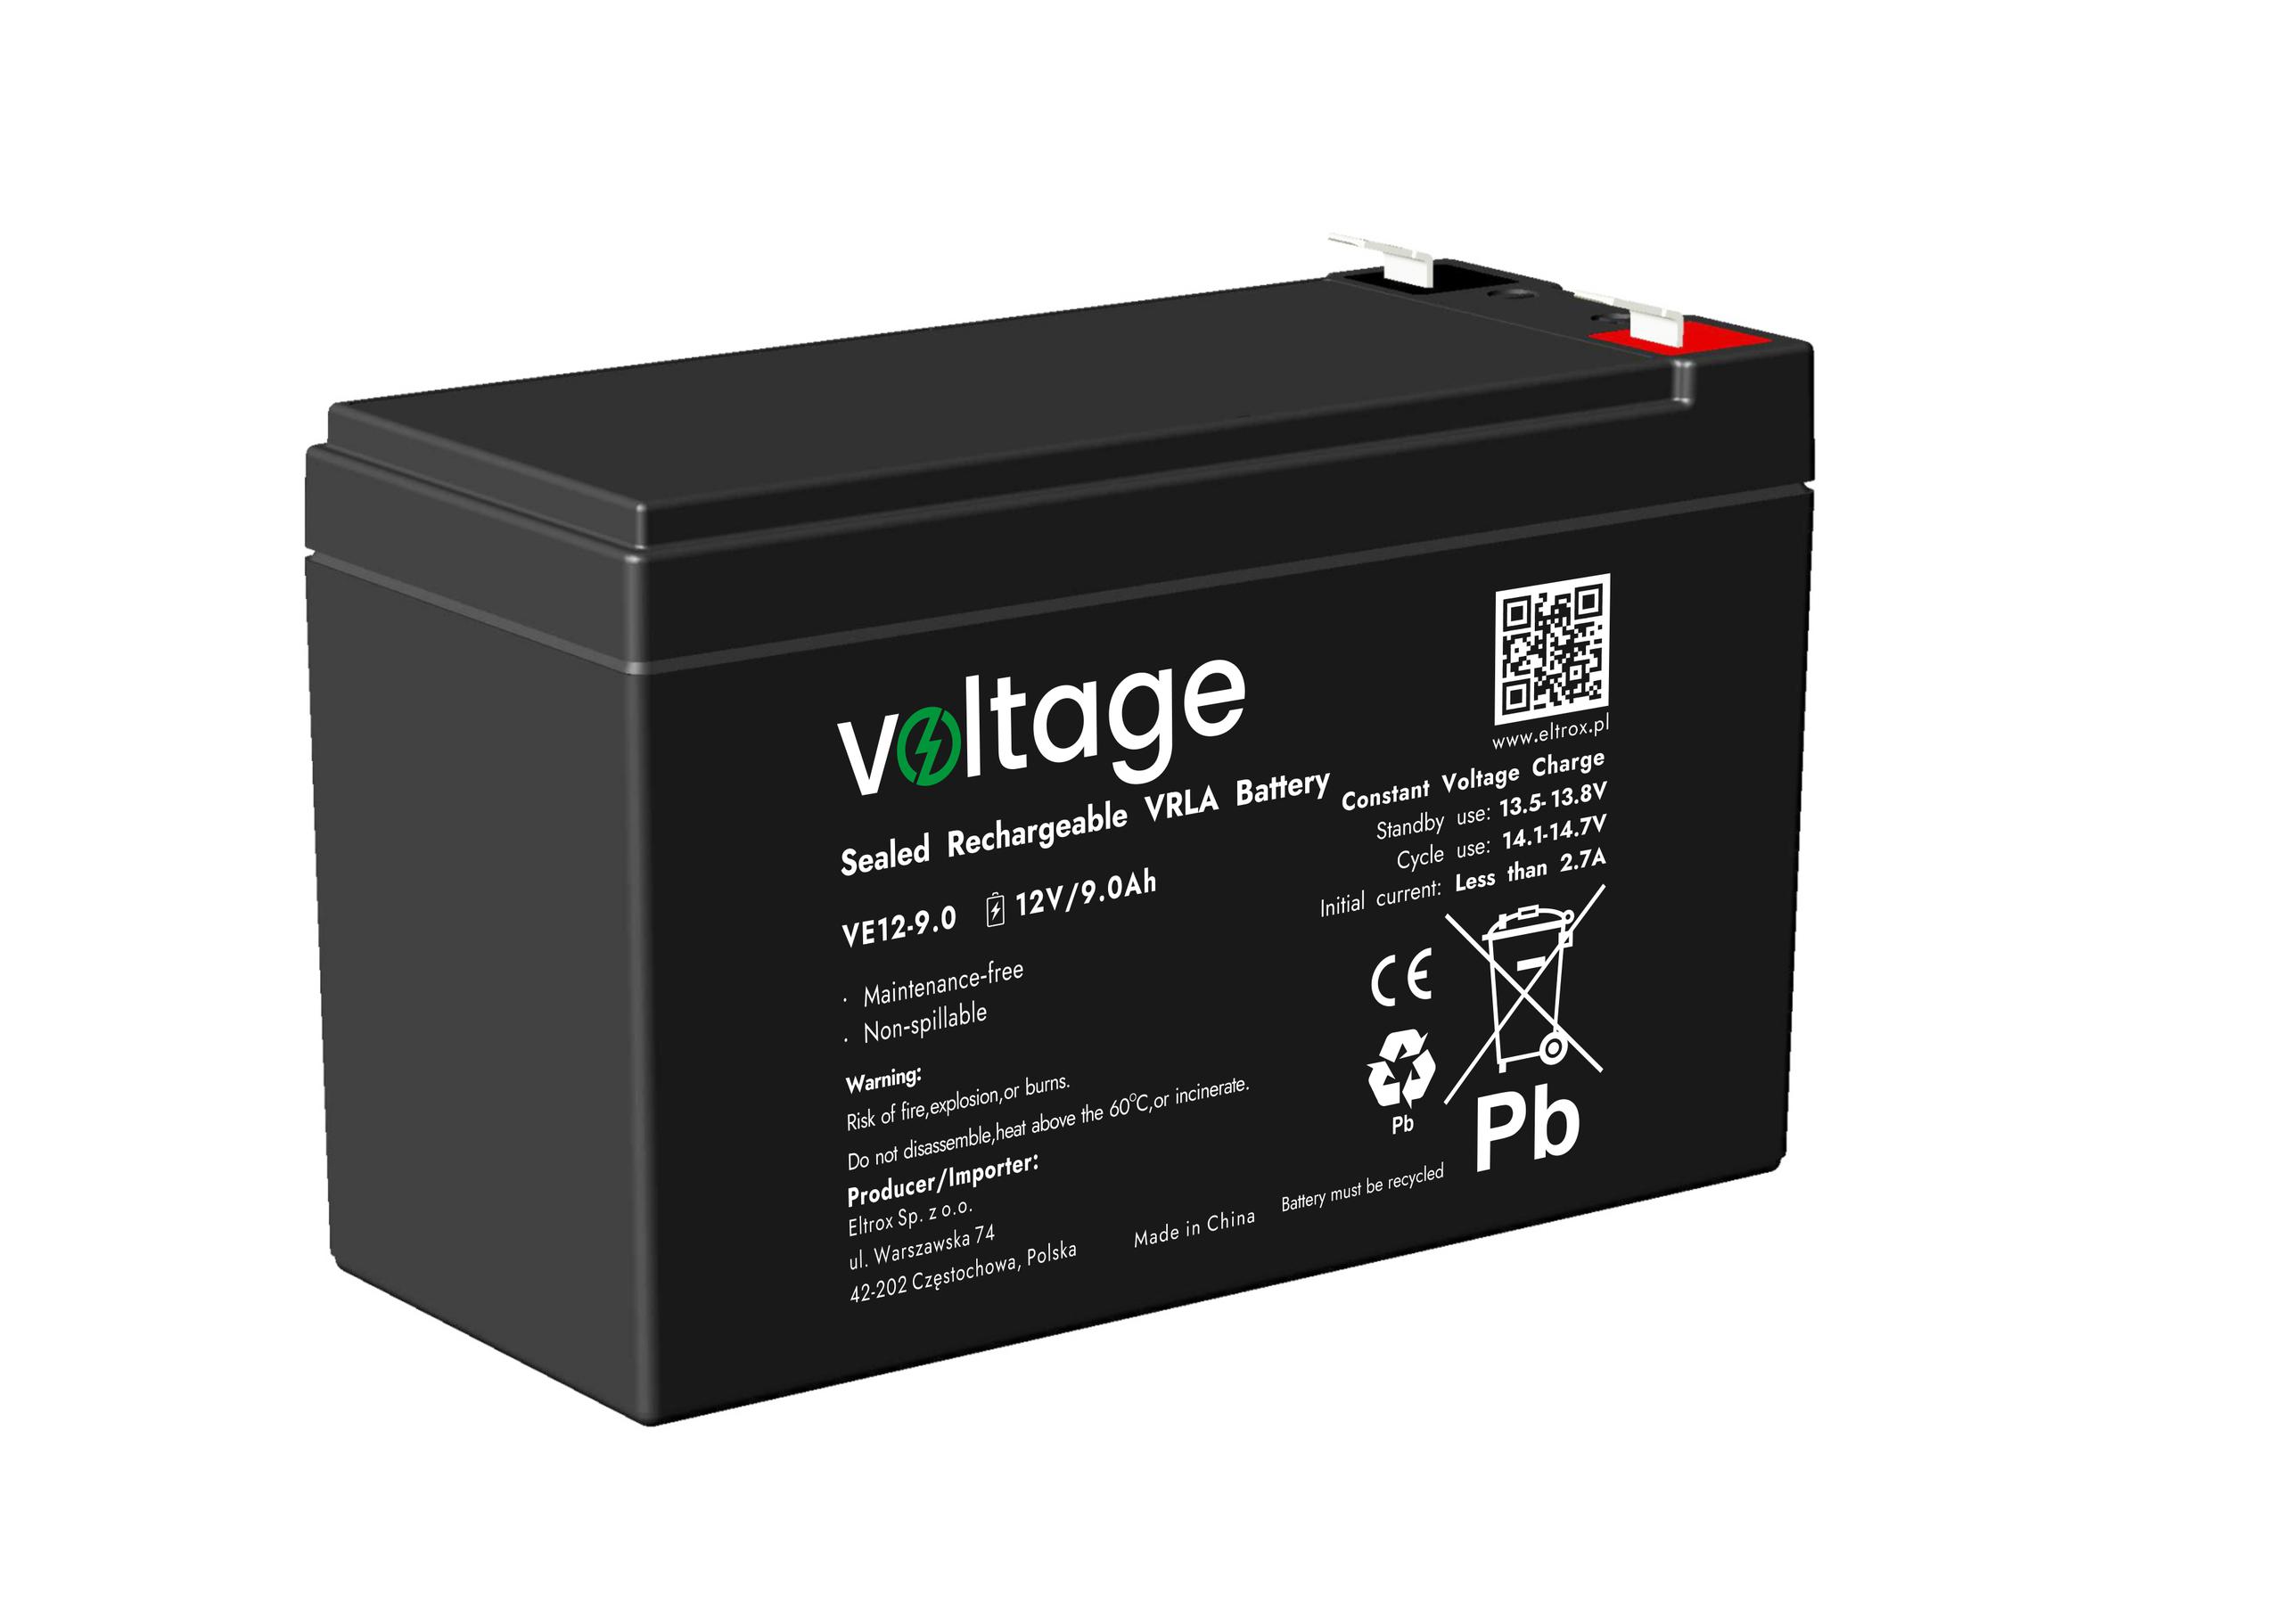 Akumulator AGM Voltage 12V 9.0Ah VE12-9.0 - najważniejsze cechy: